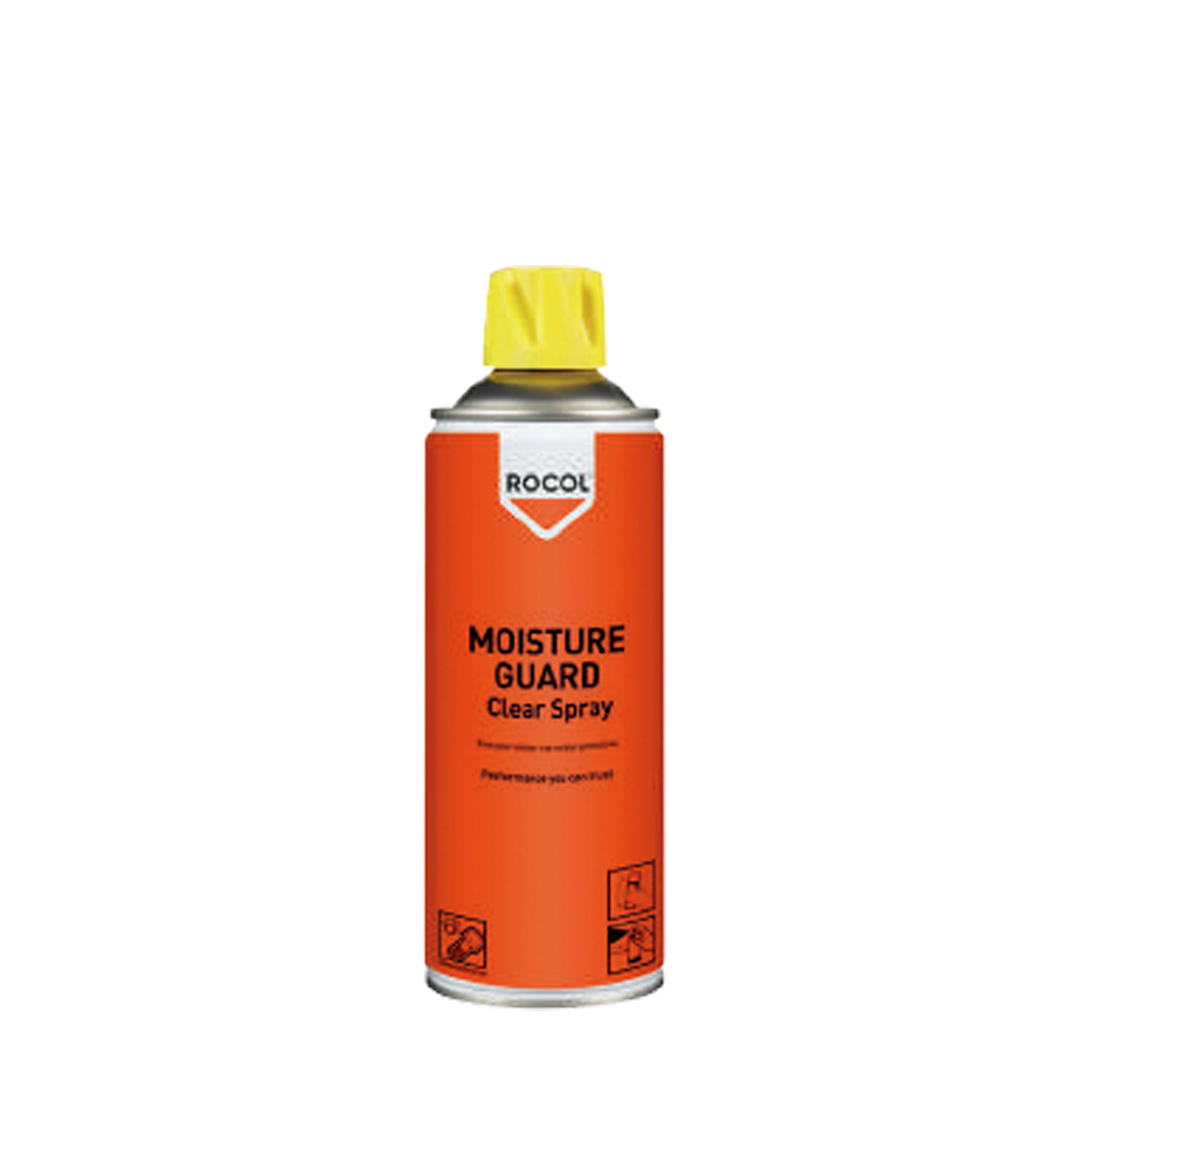 ROCOL MOISTURE GUARD Clear Spray透明模具防锈剂(rocol 69025)